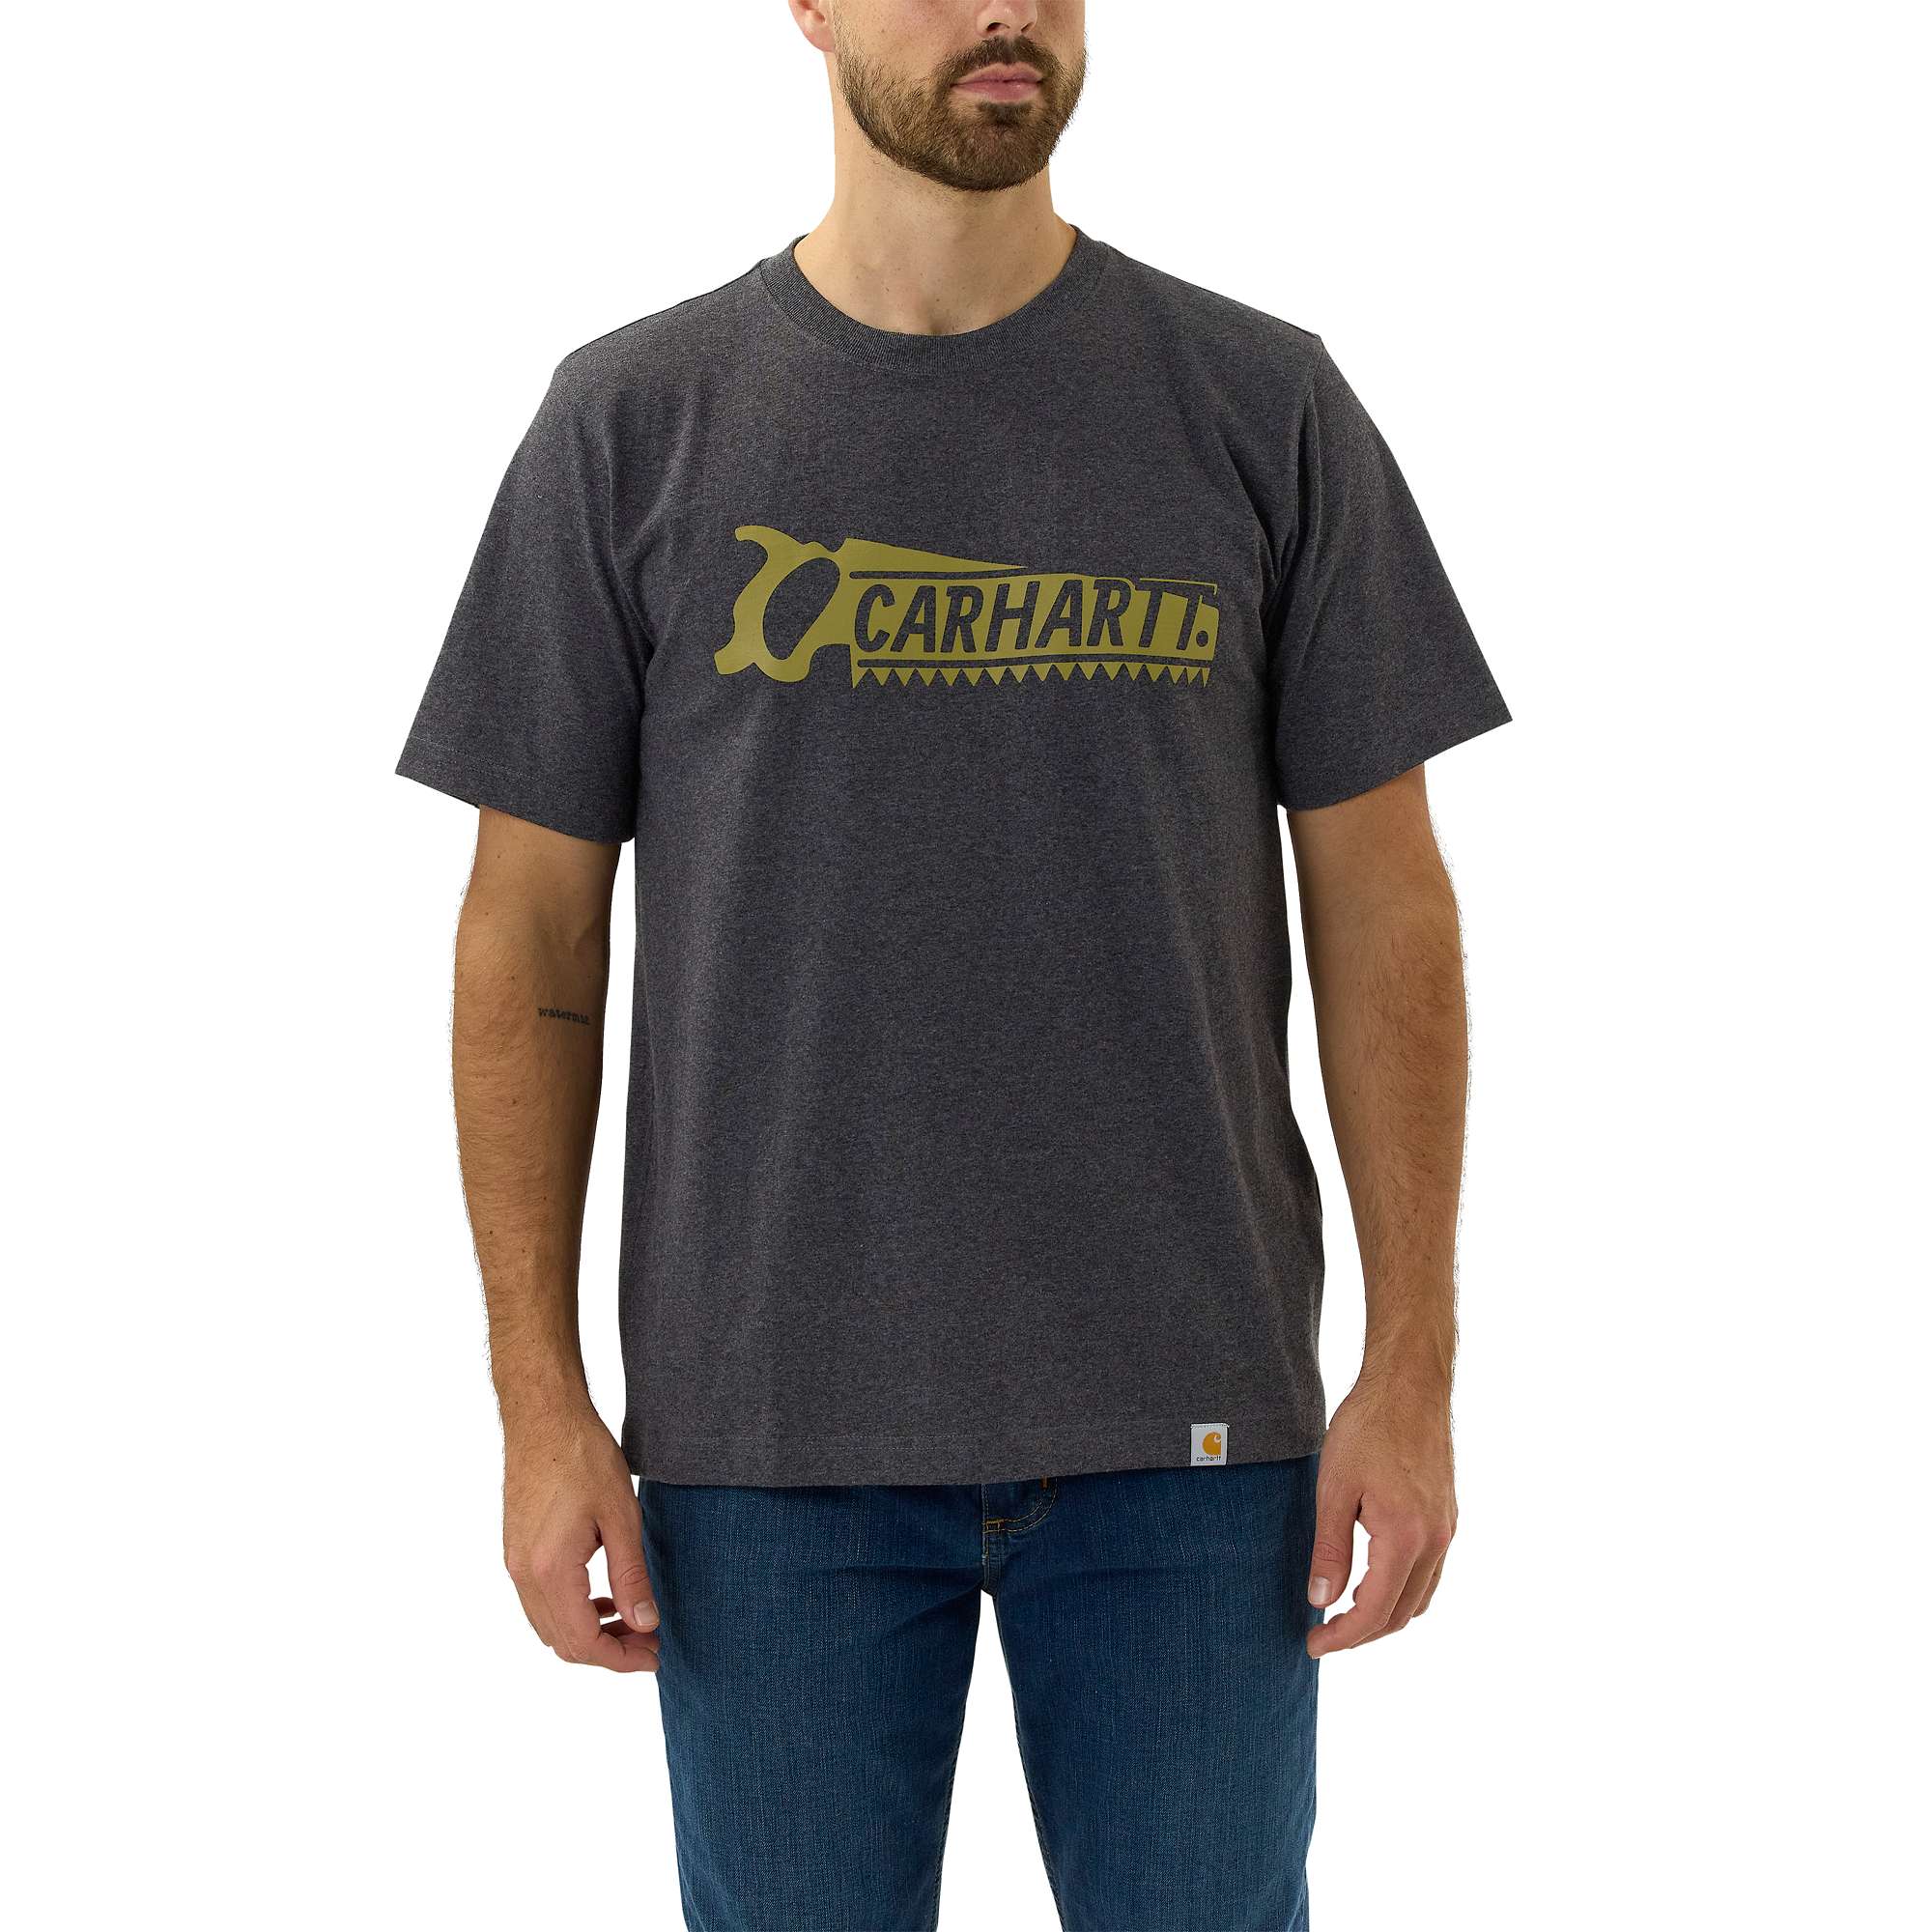 Carhartt T-Shirt mit Aufdruck "Carhartt Saw", Carbon (Grau)